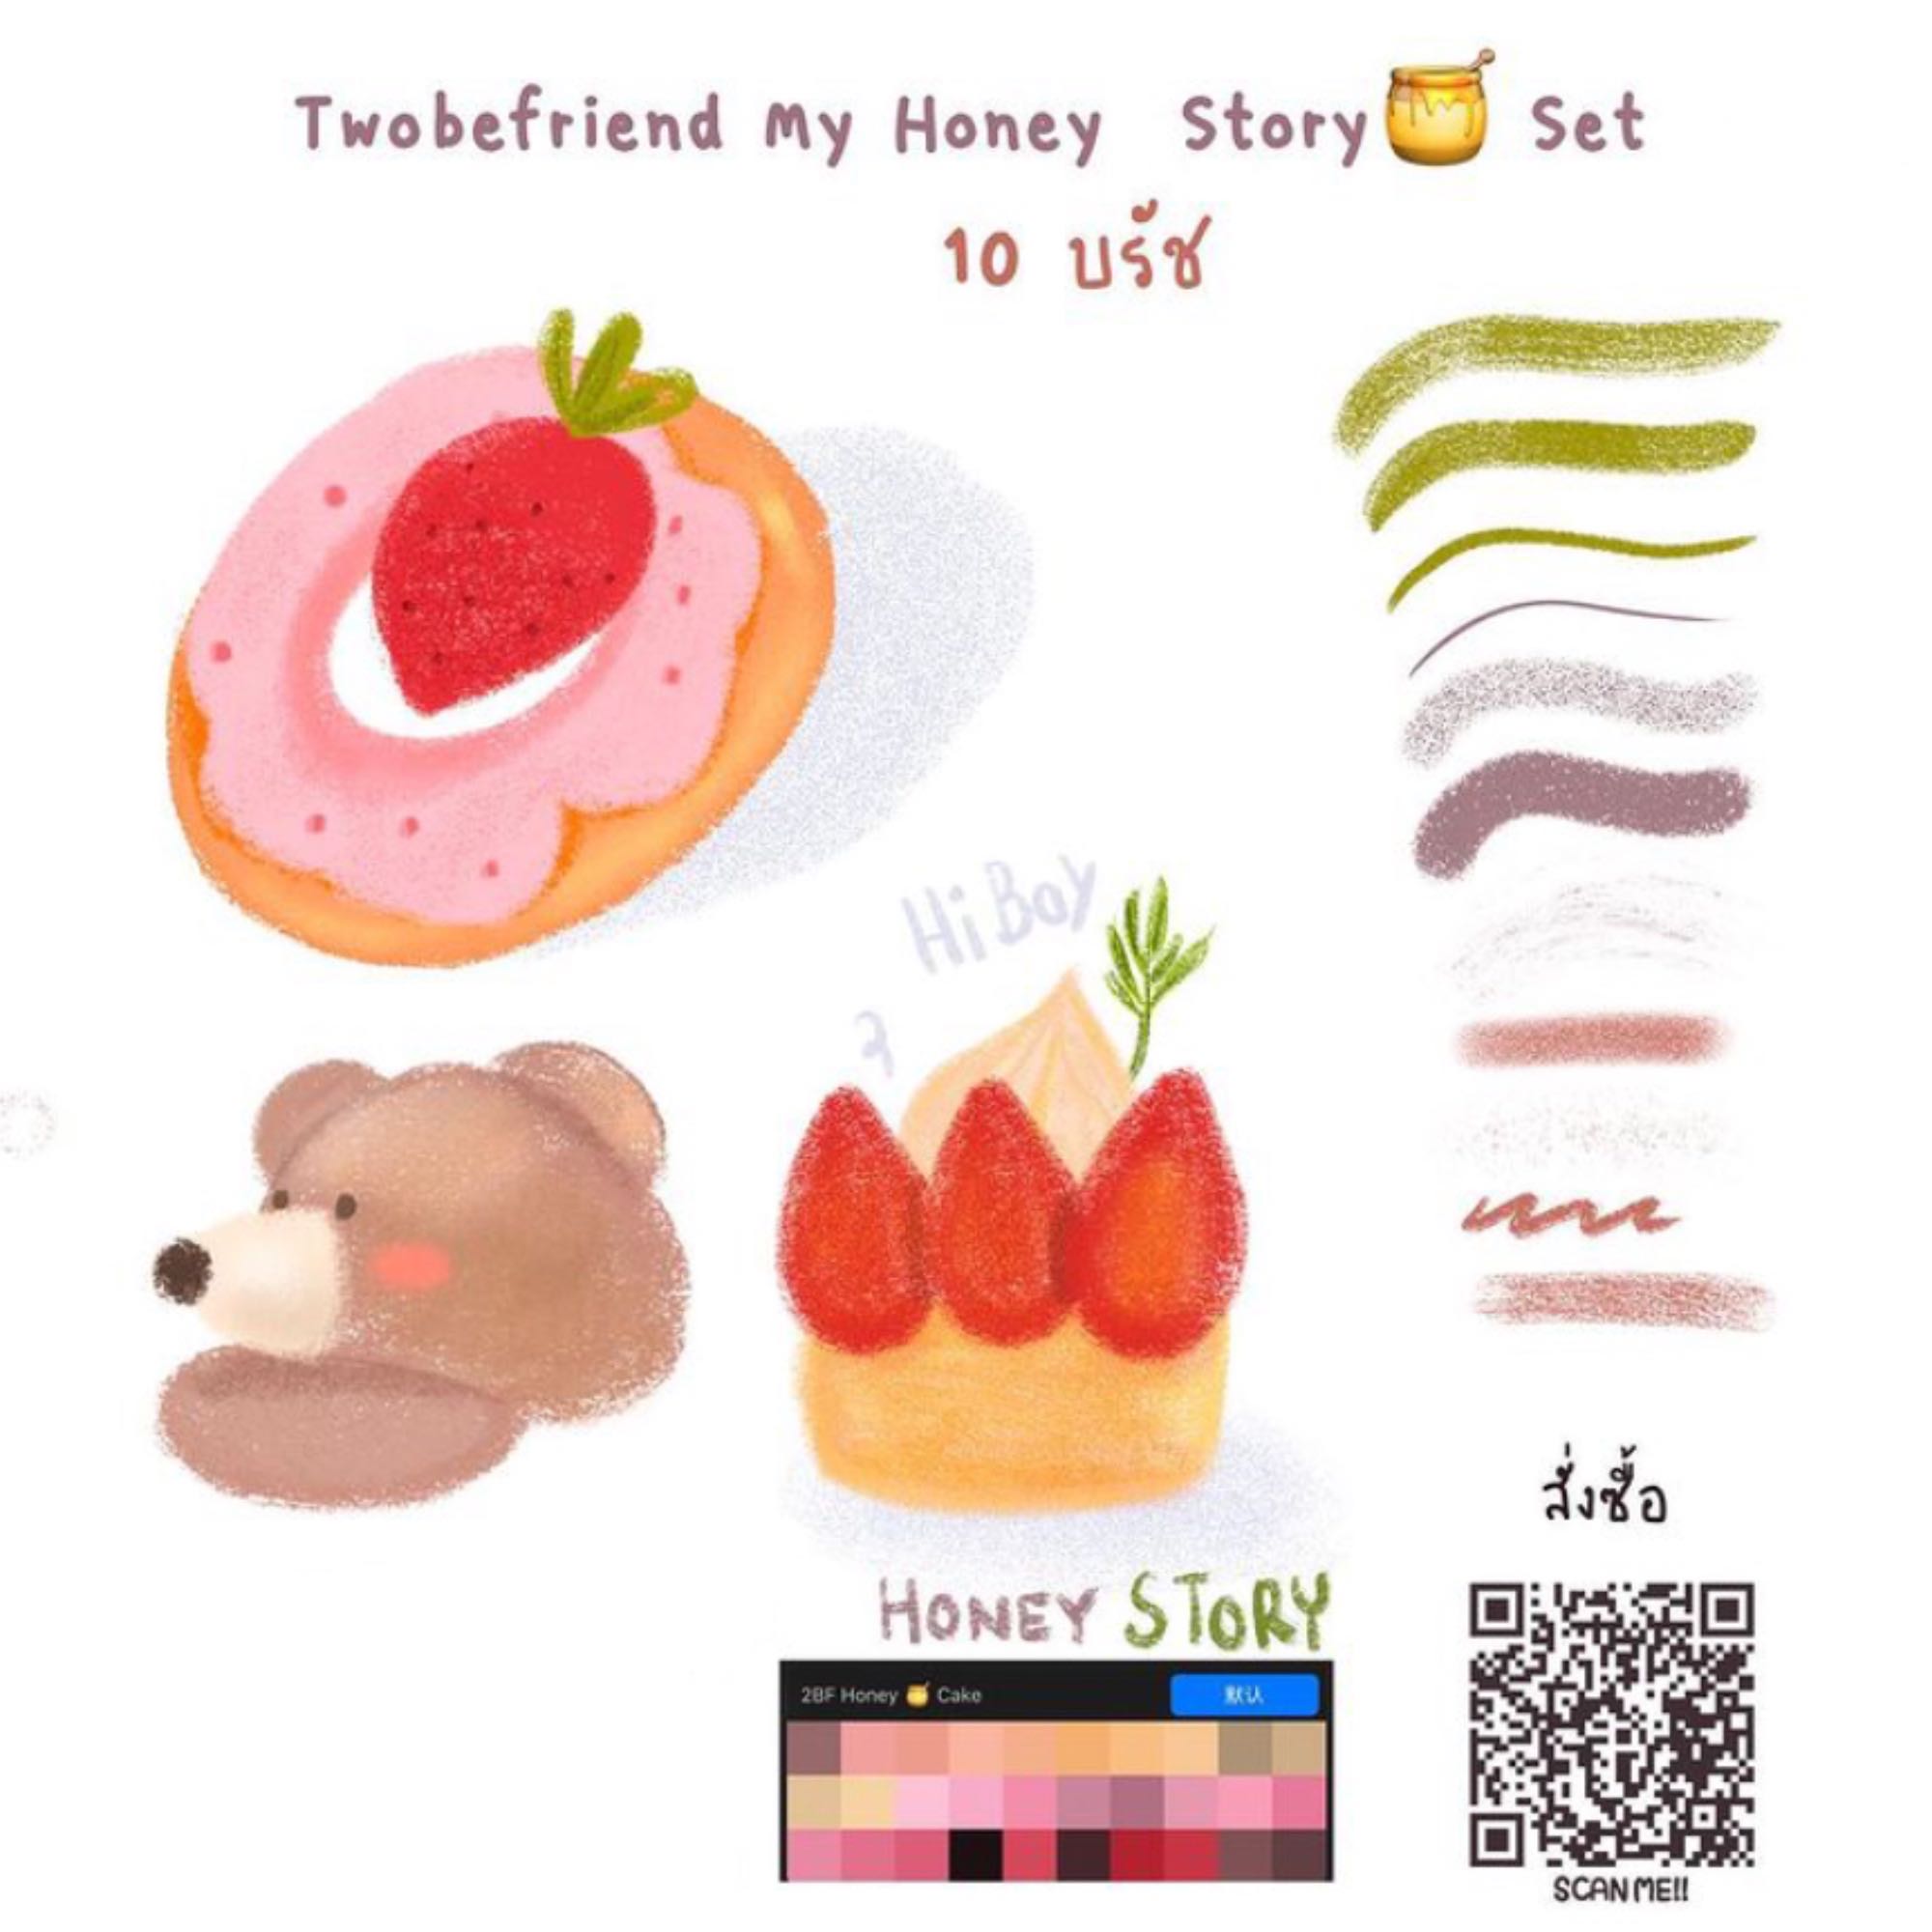 Twobefriend My Honey story set